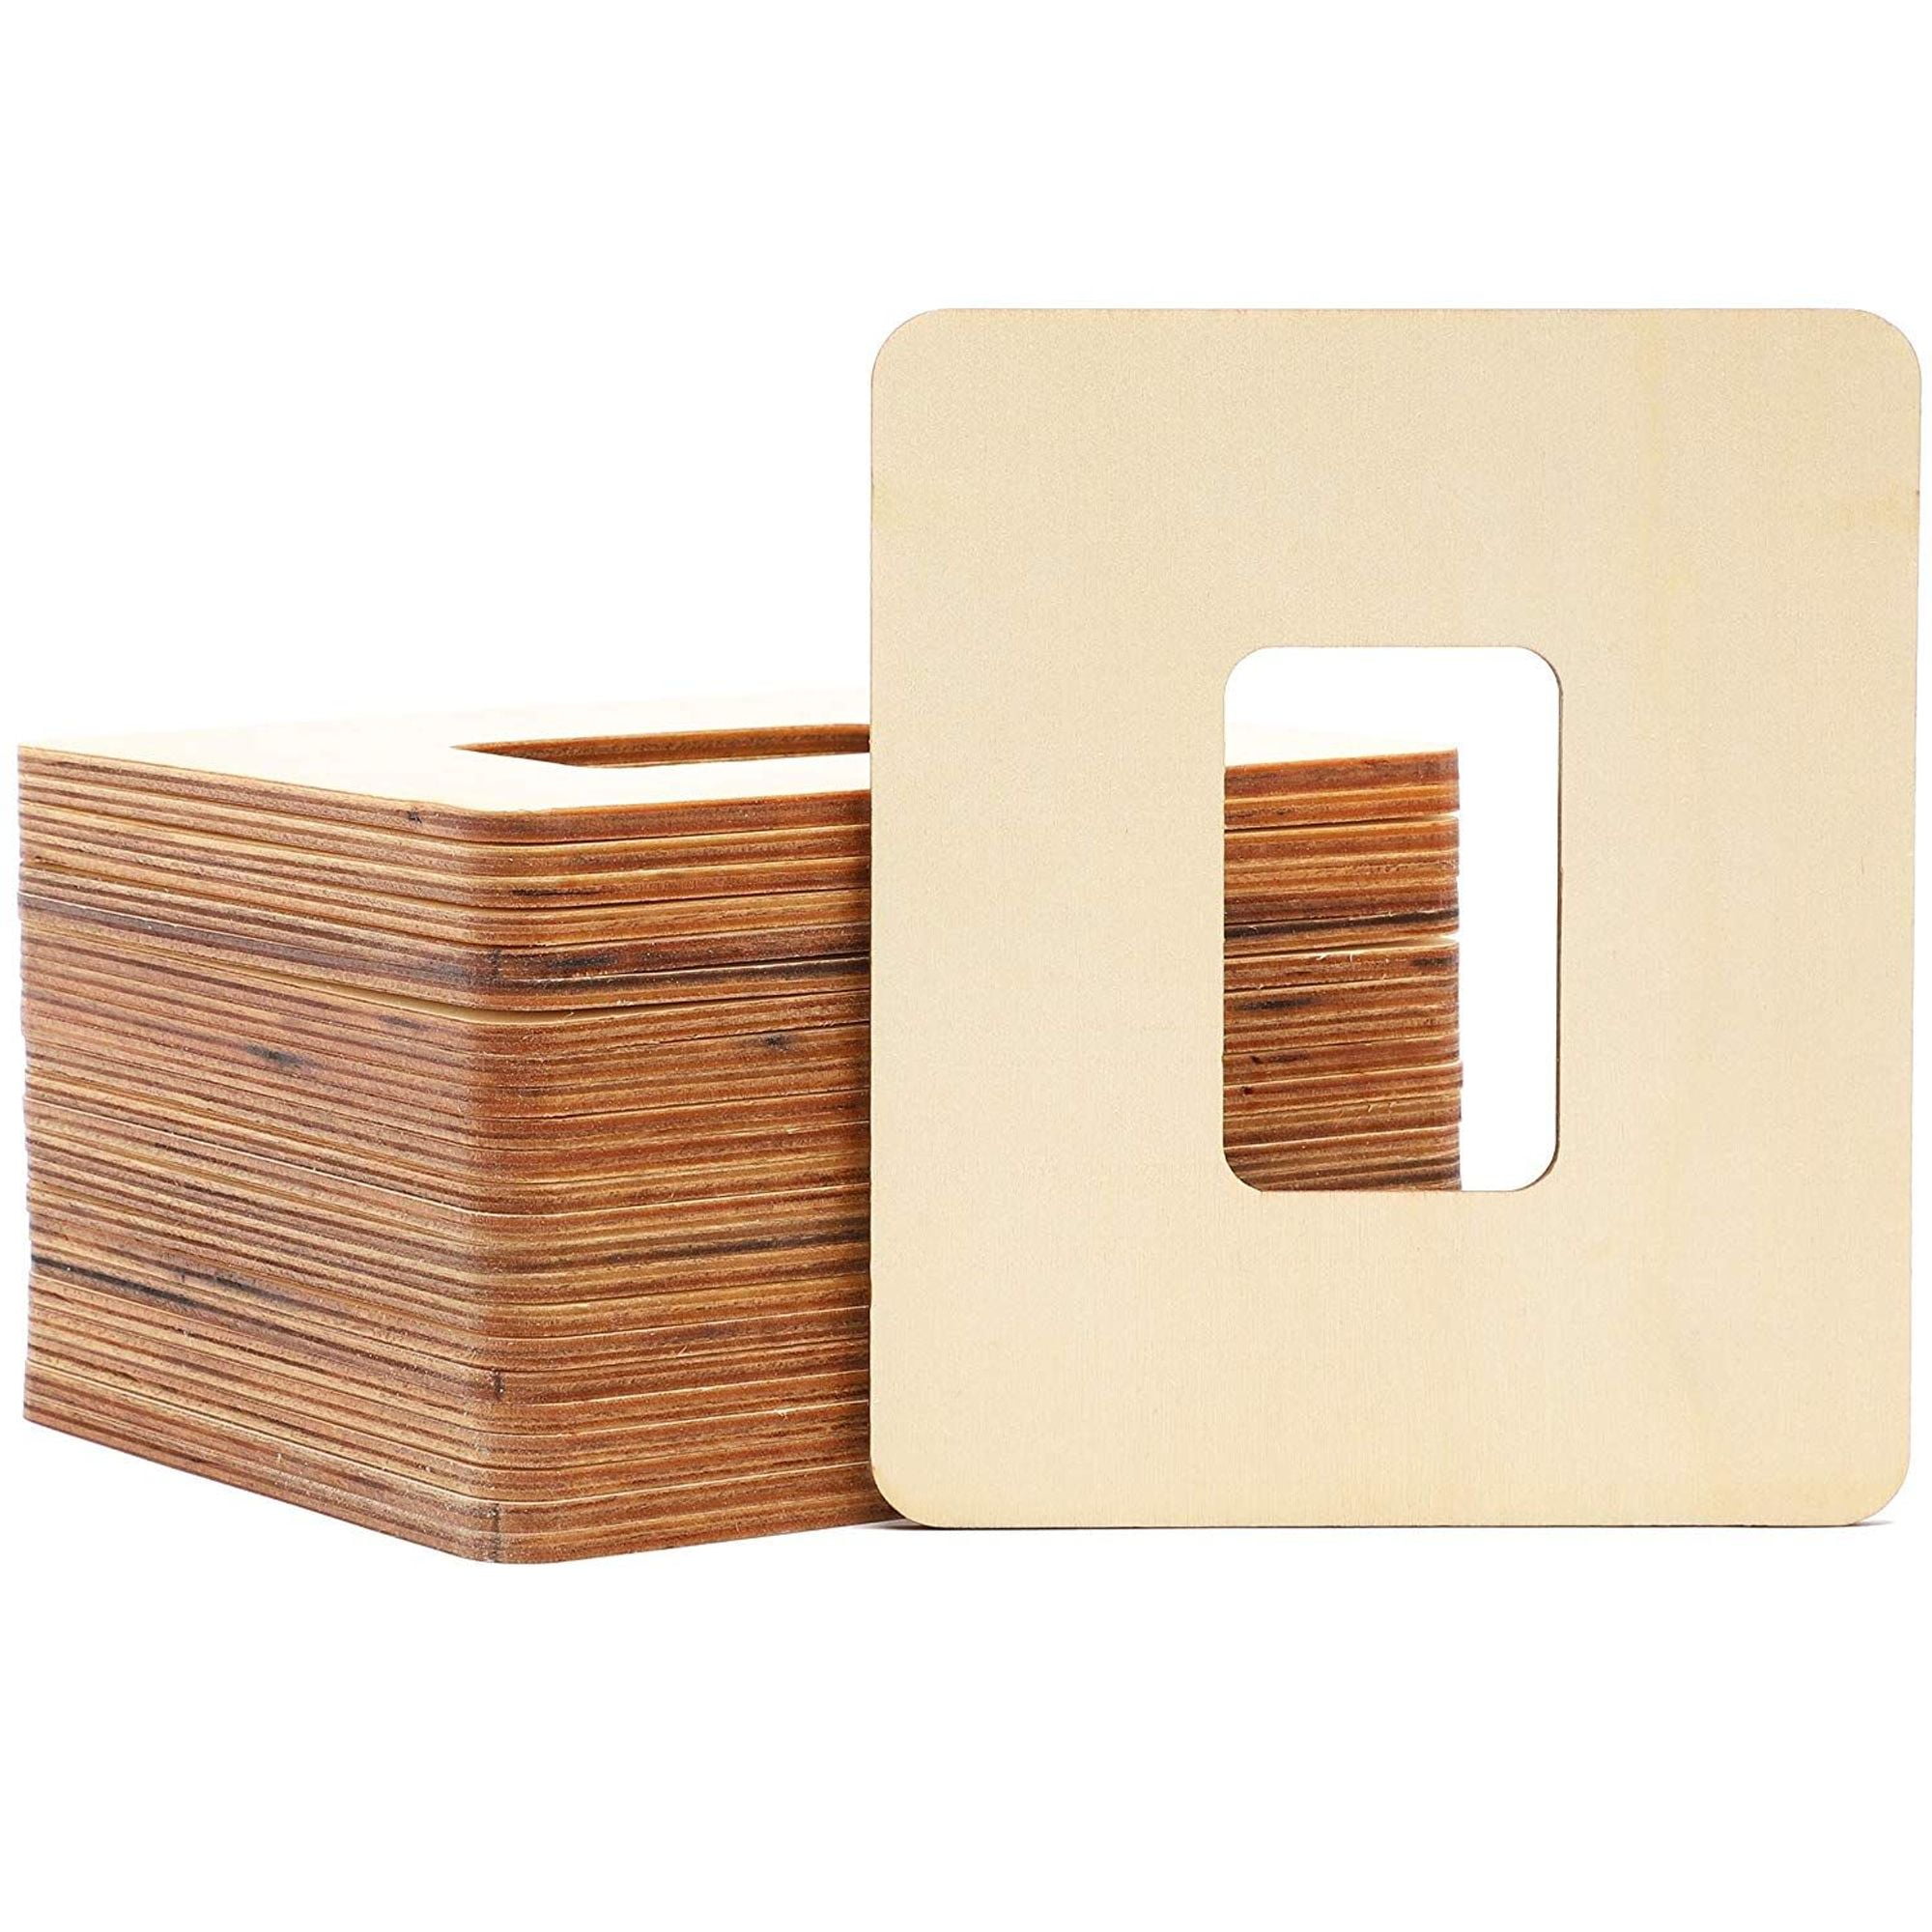 24 Packs Unfinished Wood Frames Wooden Frame Cutout For Diy Craft Home